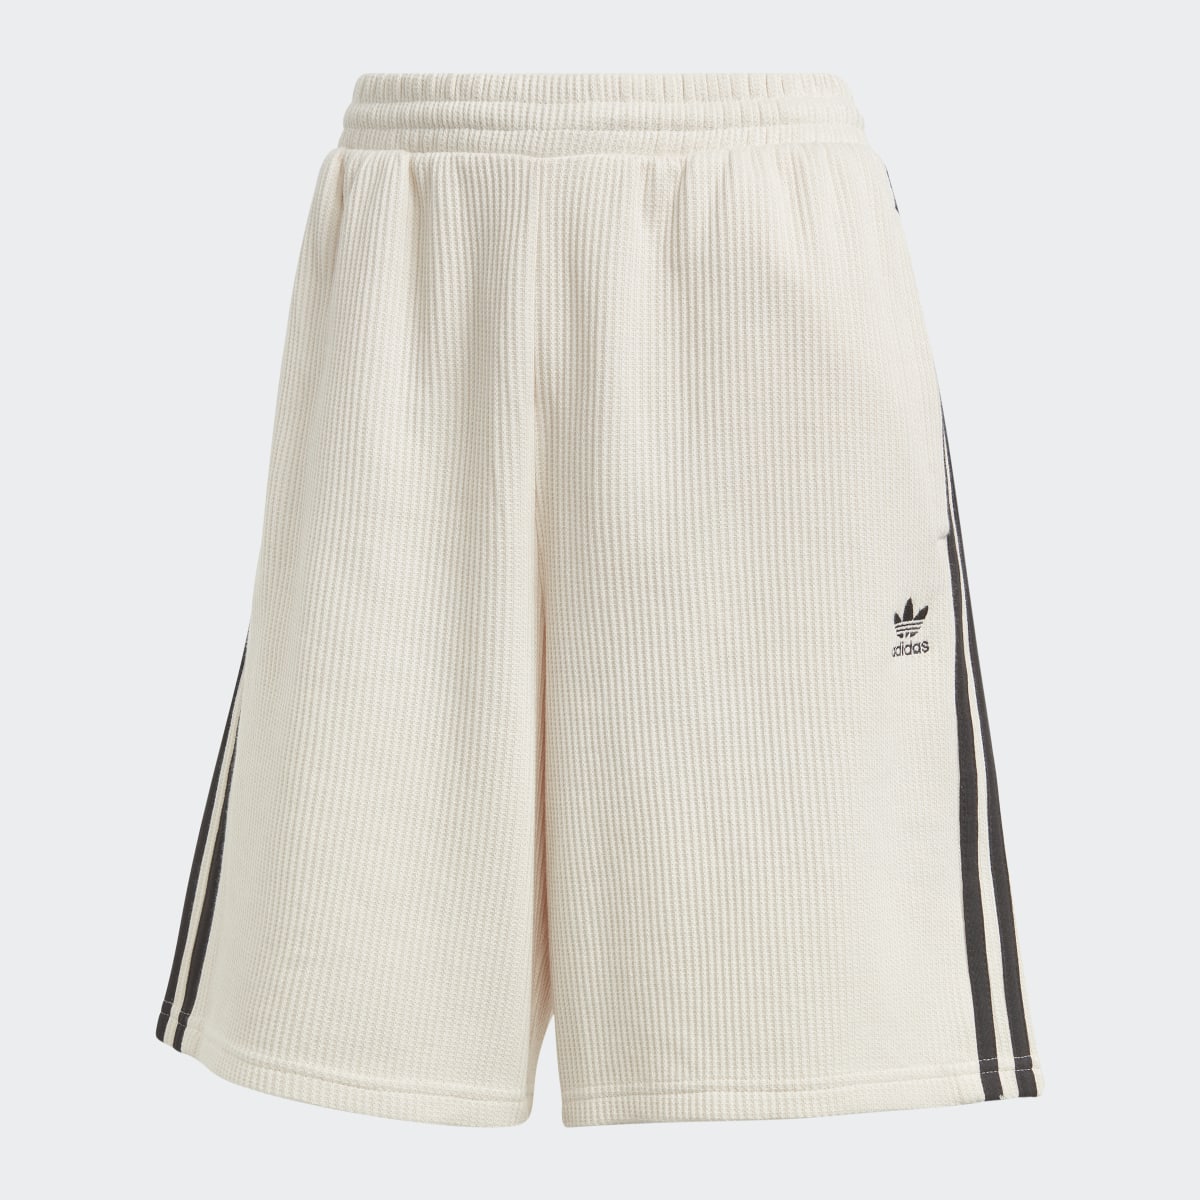 Adidas Bermuda Shorts. 4